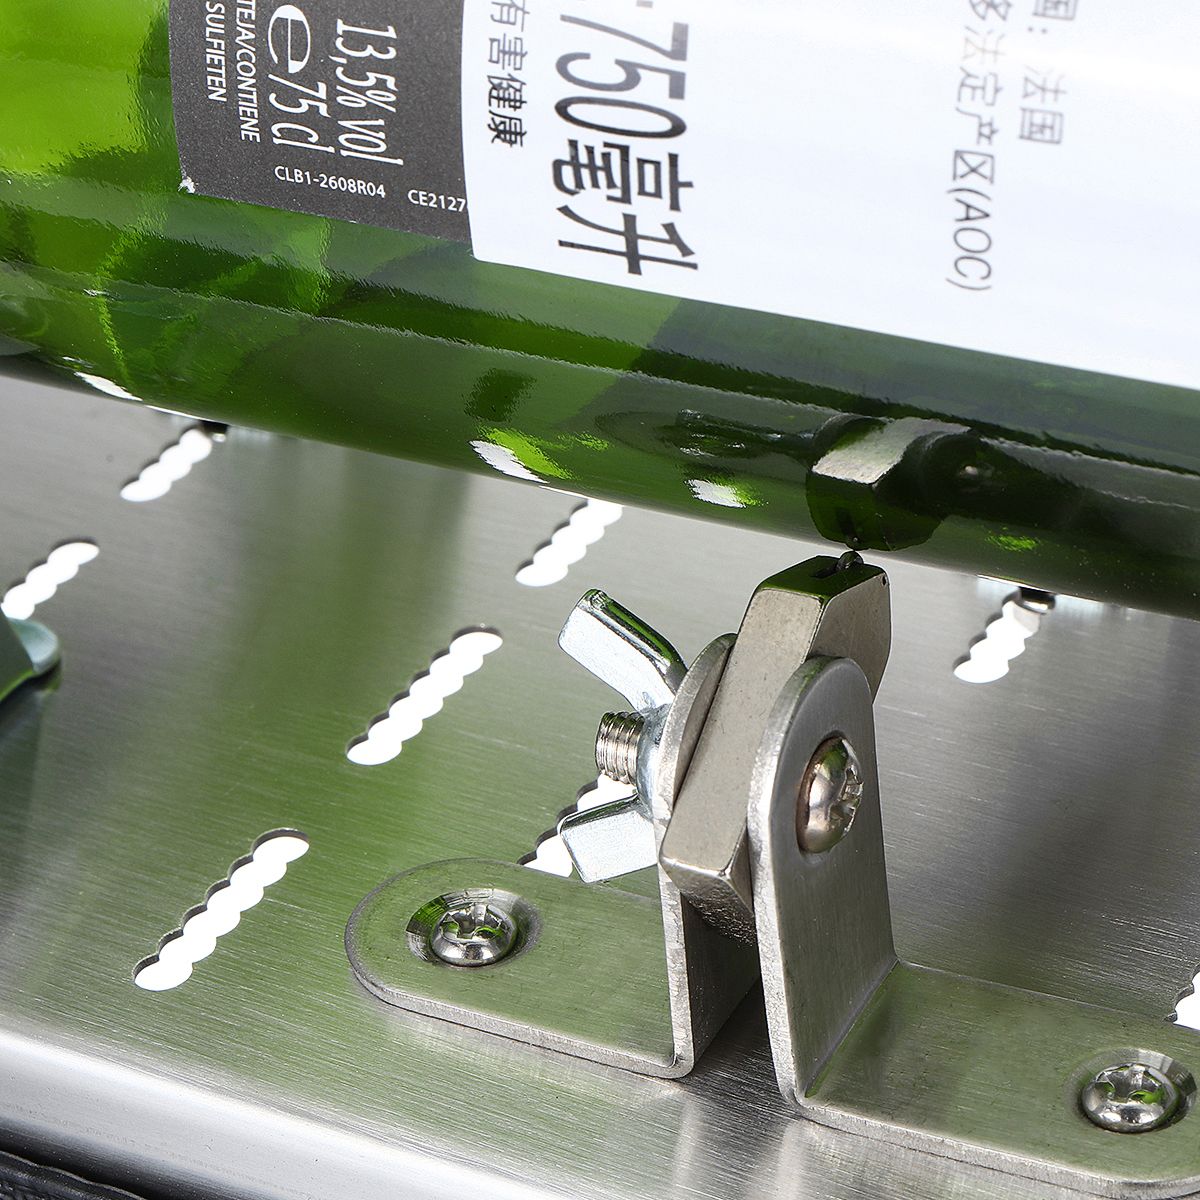 DIY-Ajustable-Glass-Bottle-Cutter-High-Strength-Machine-Wine-Beer-Glass-Bottles-Cutting-Tool-1312443